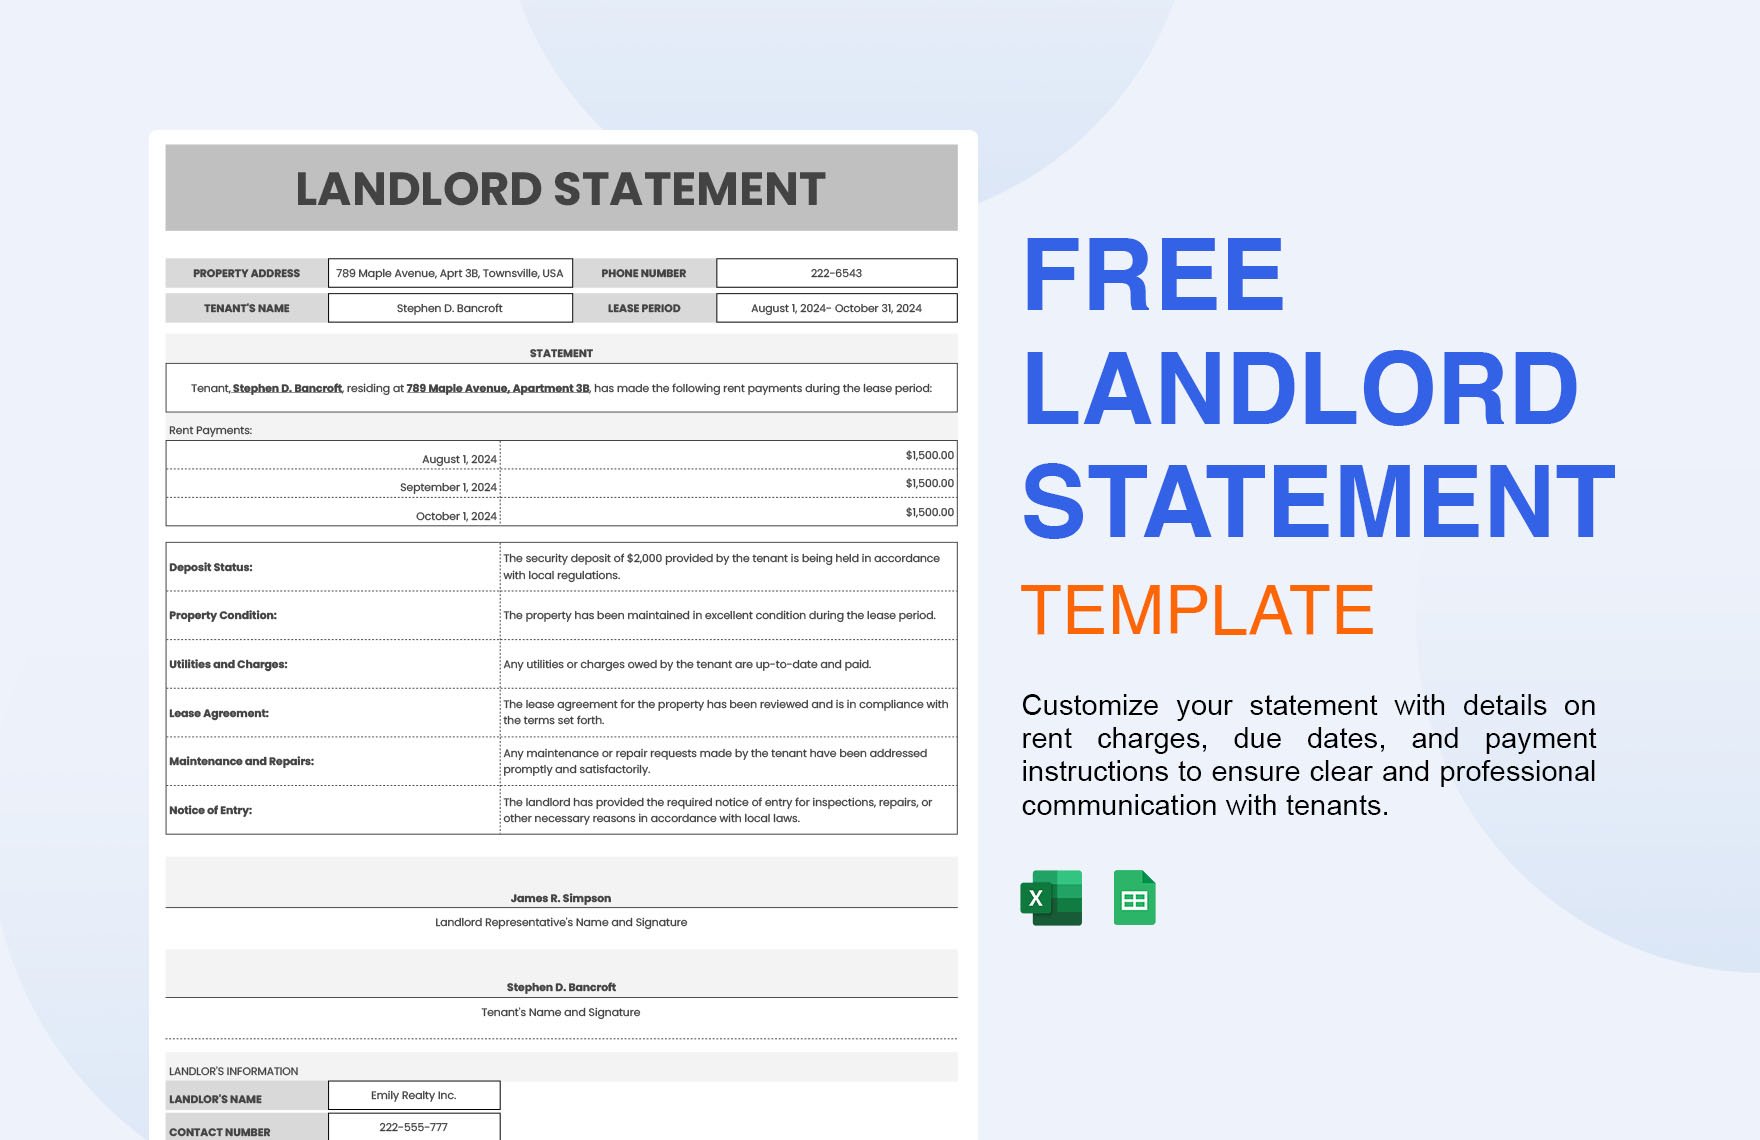 Landlord Statement Template